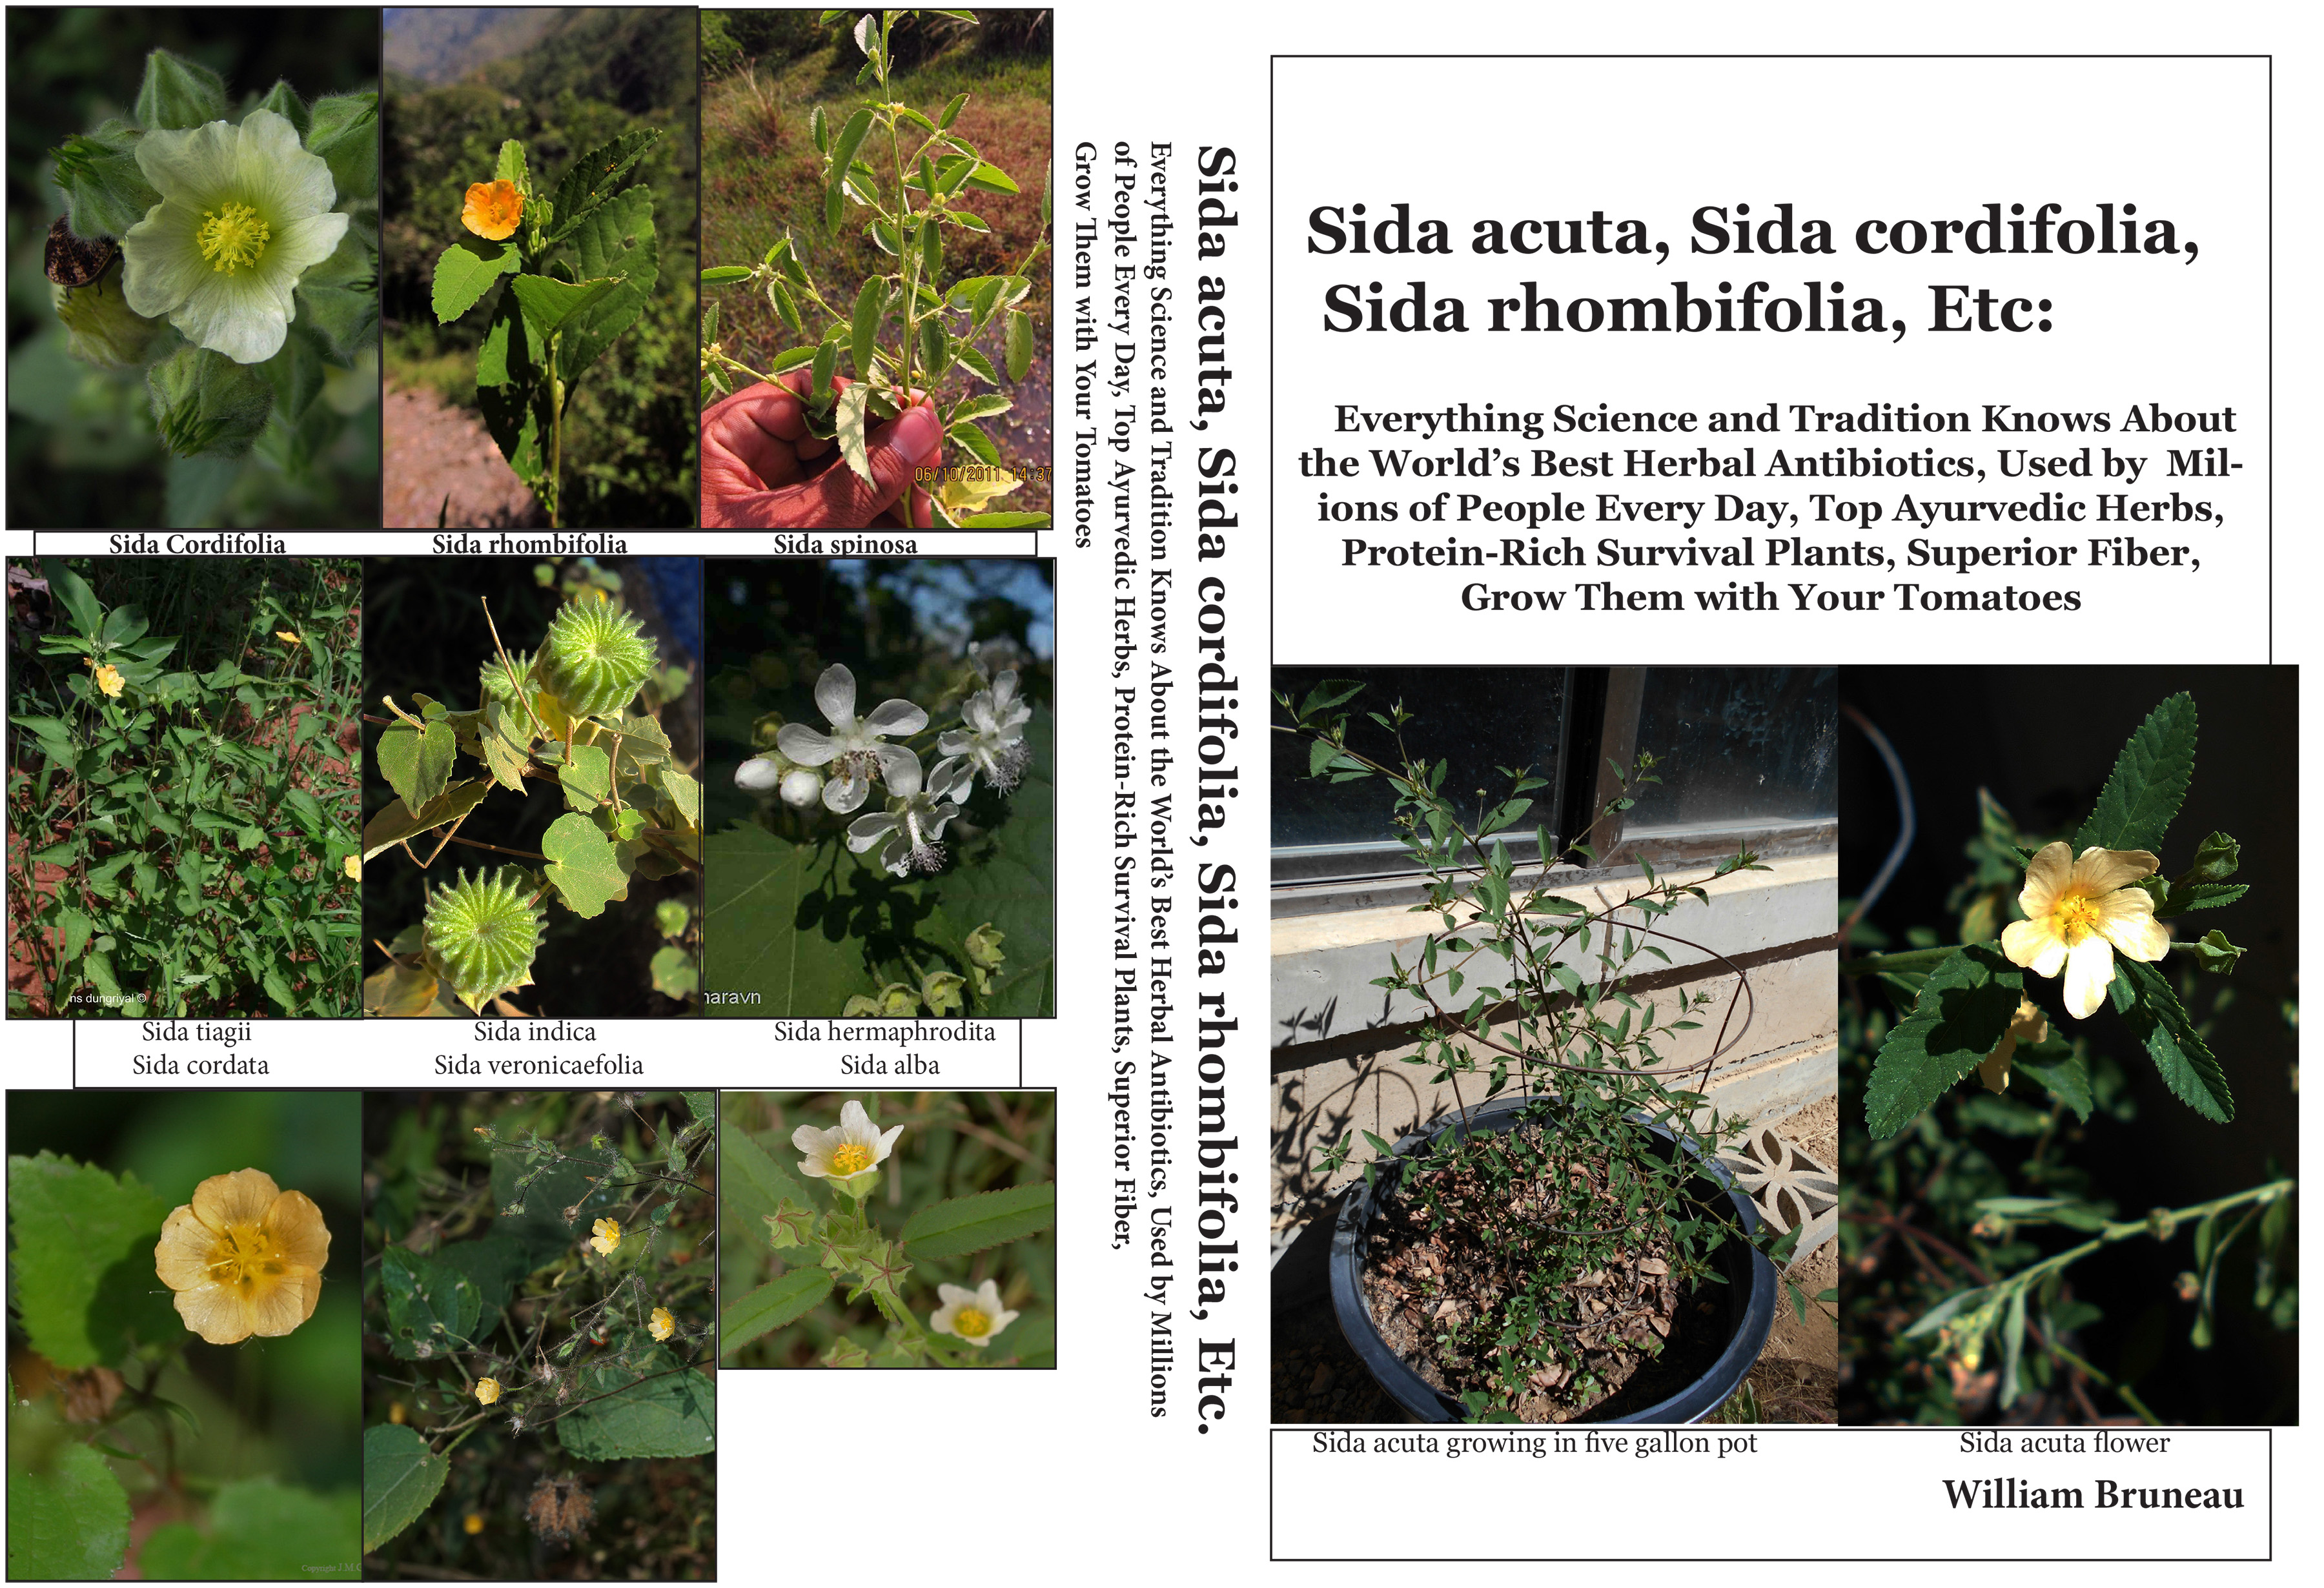 Sida acuta, Sida cordifolia, Sida rhombifolia